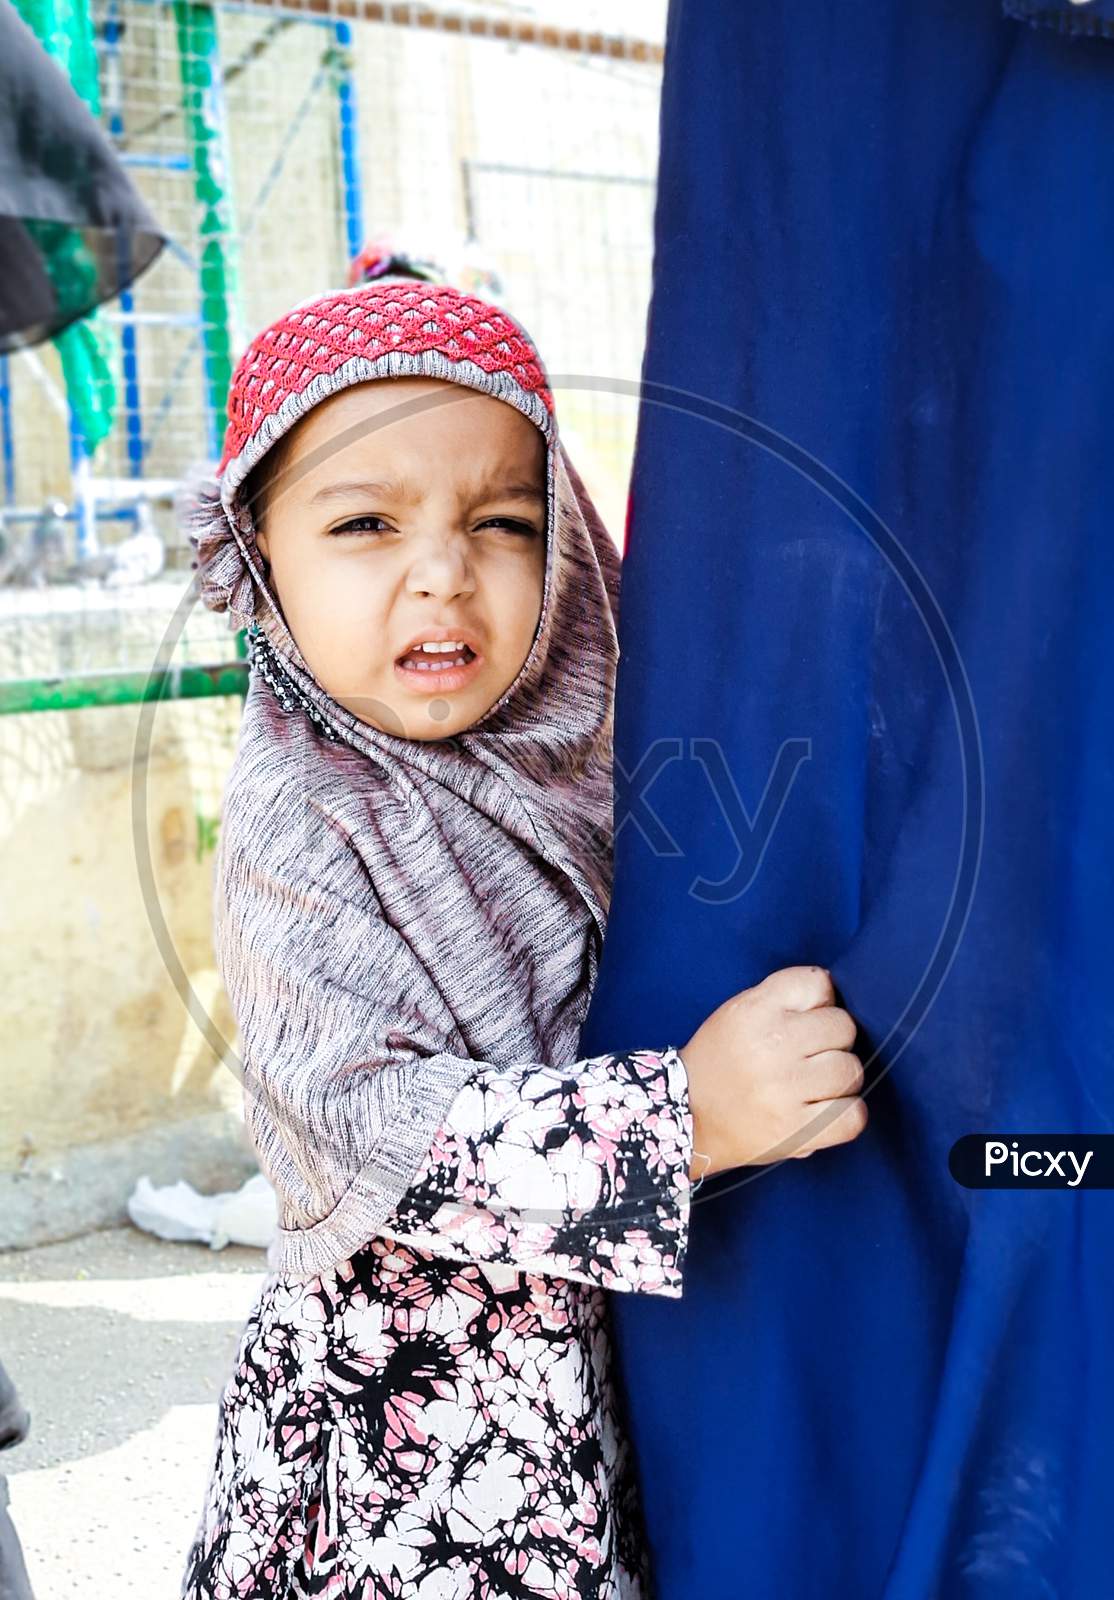 An Muslim Child Wearing Veil